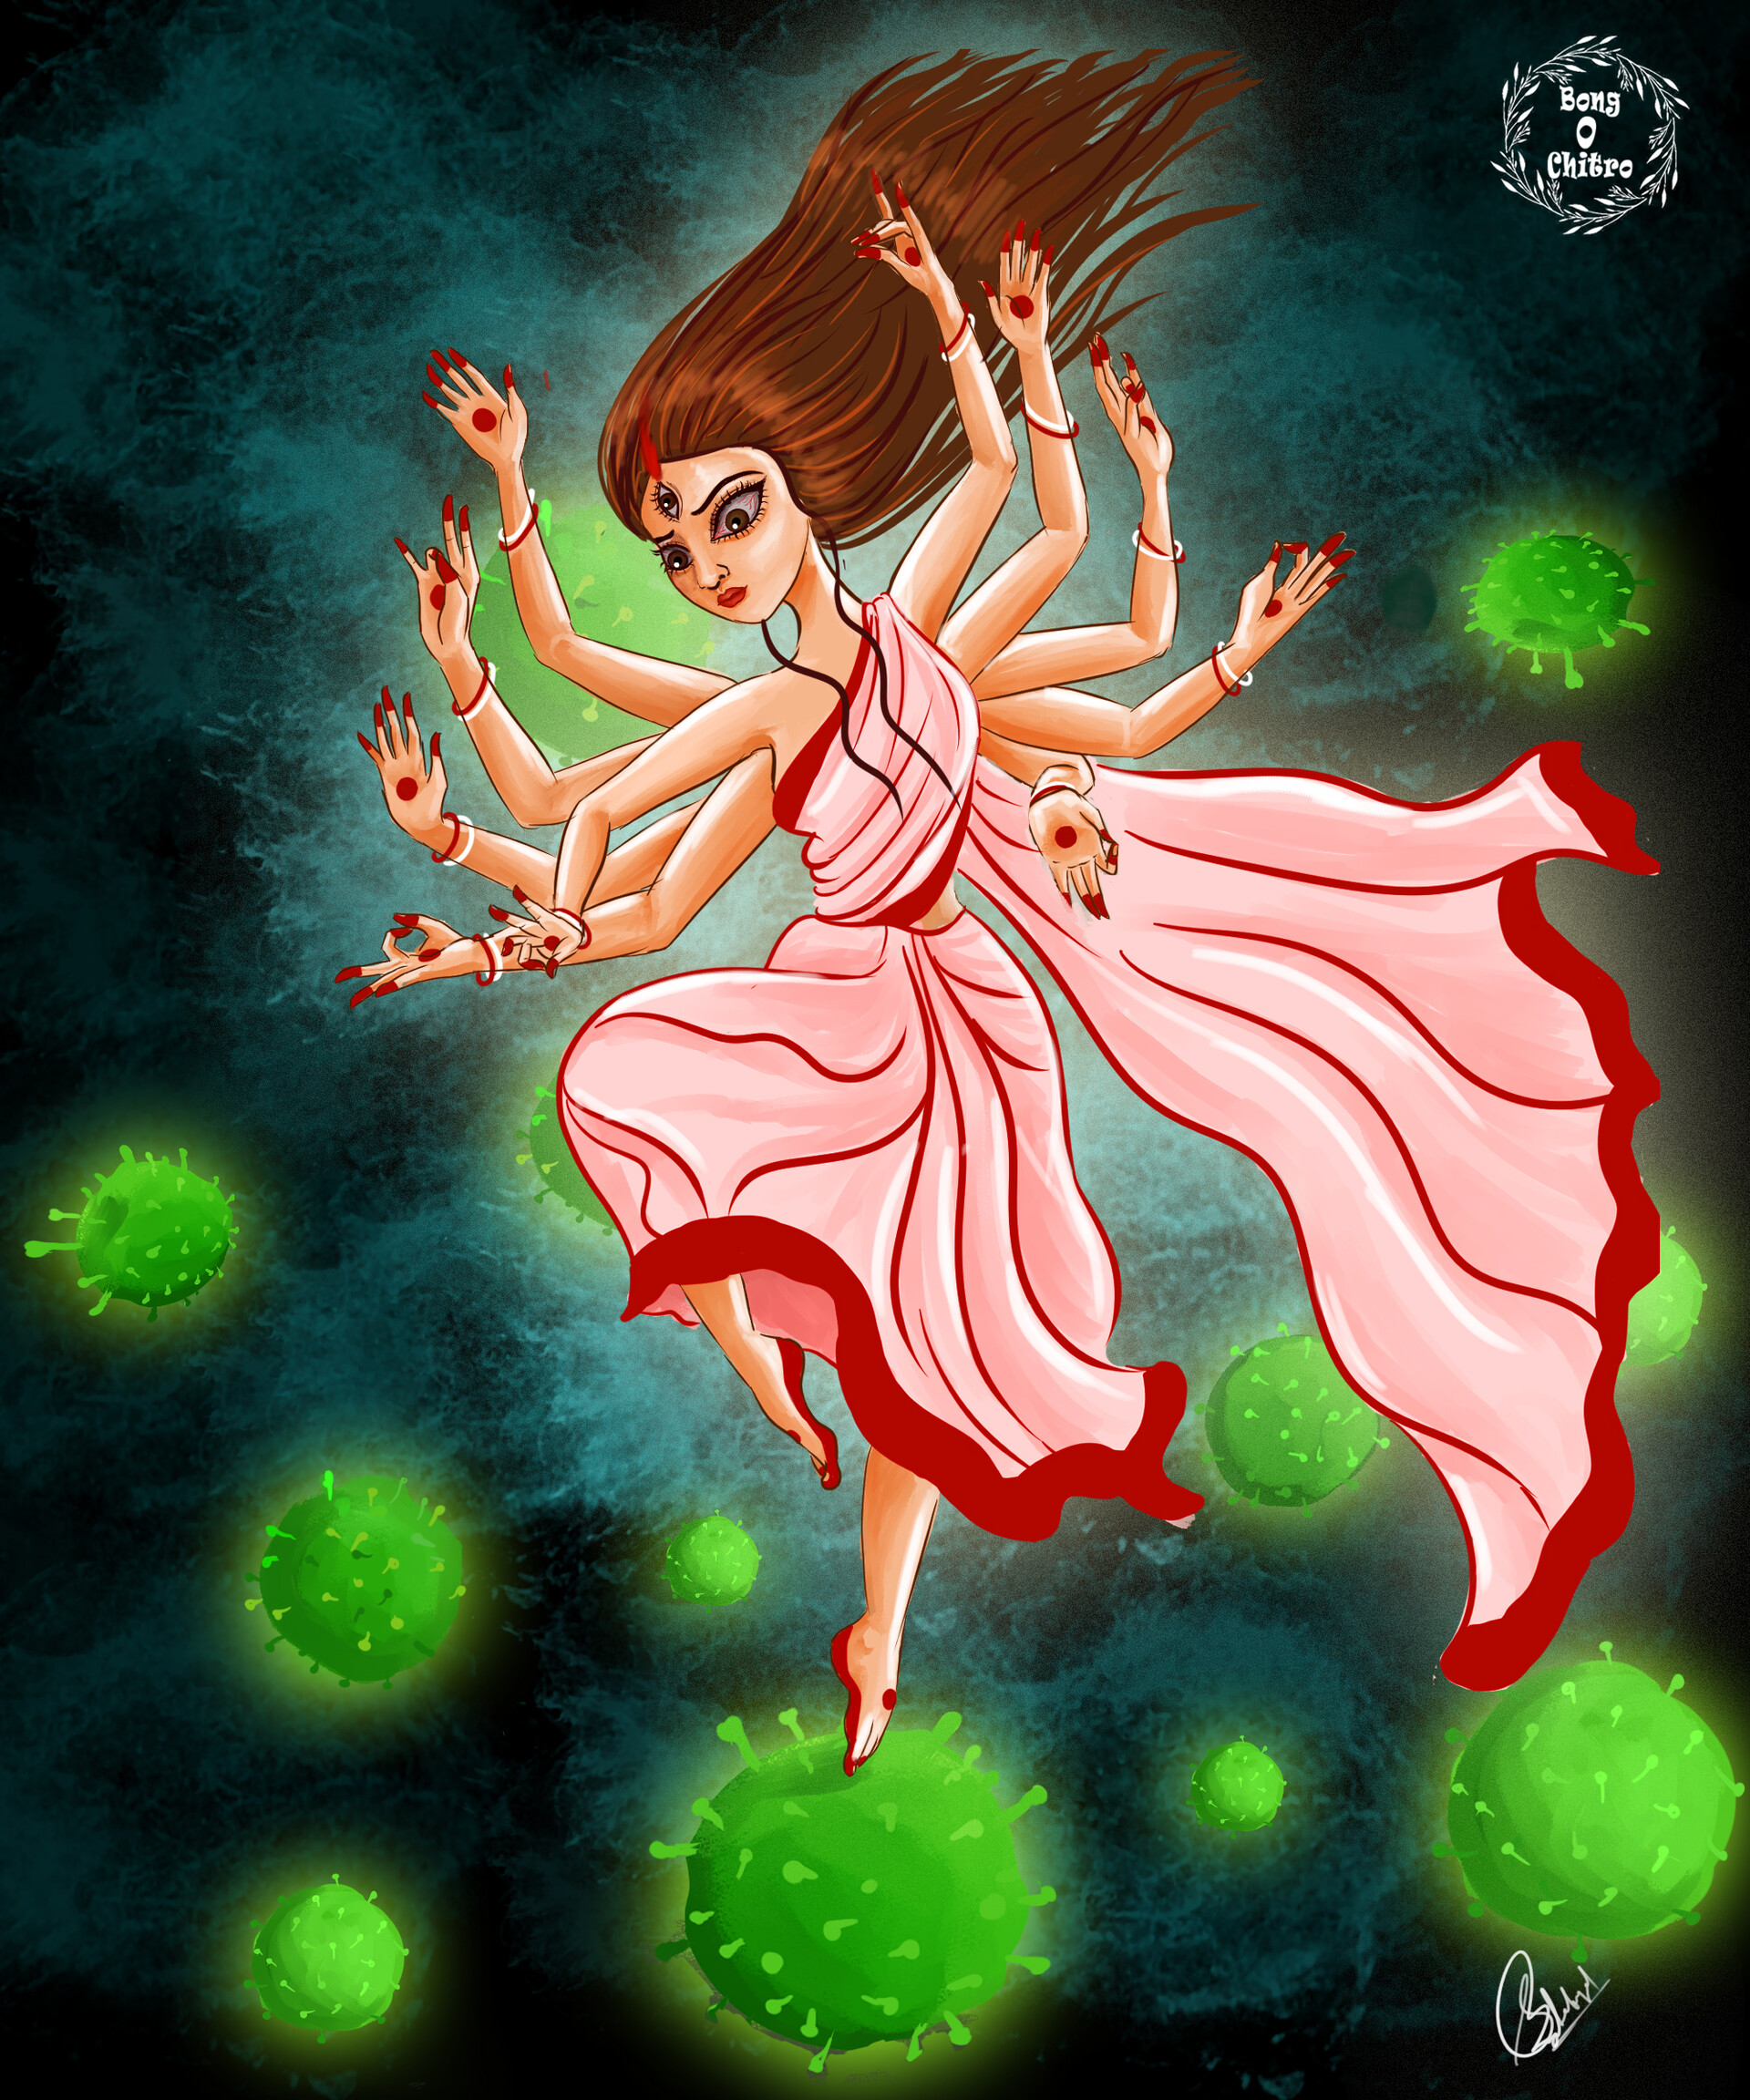 ArtStation - Maa Durga defeating Corona Virus